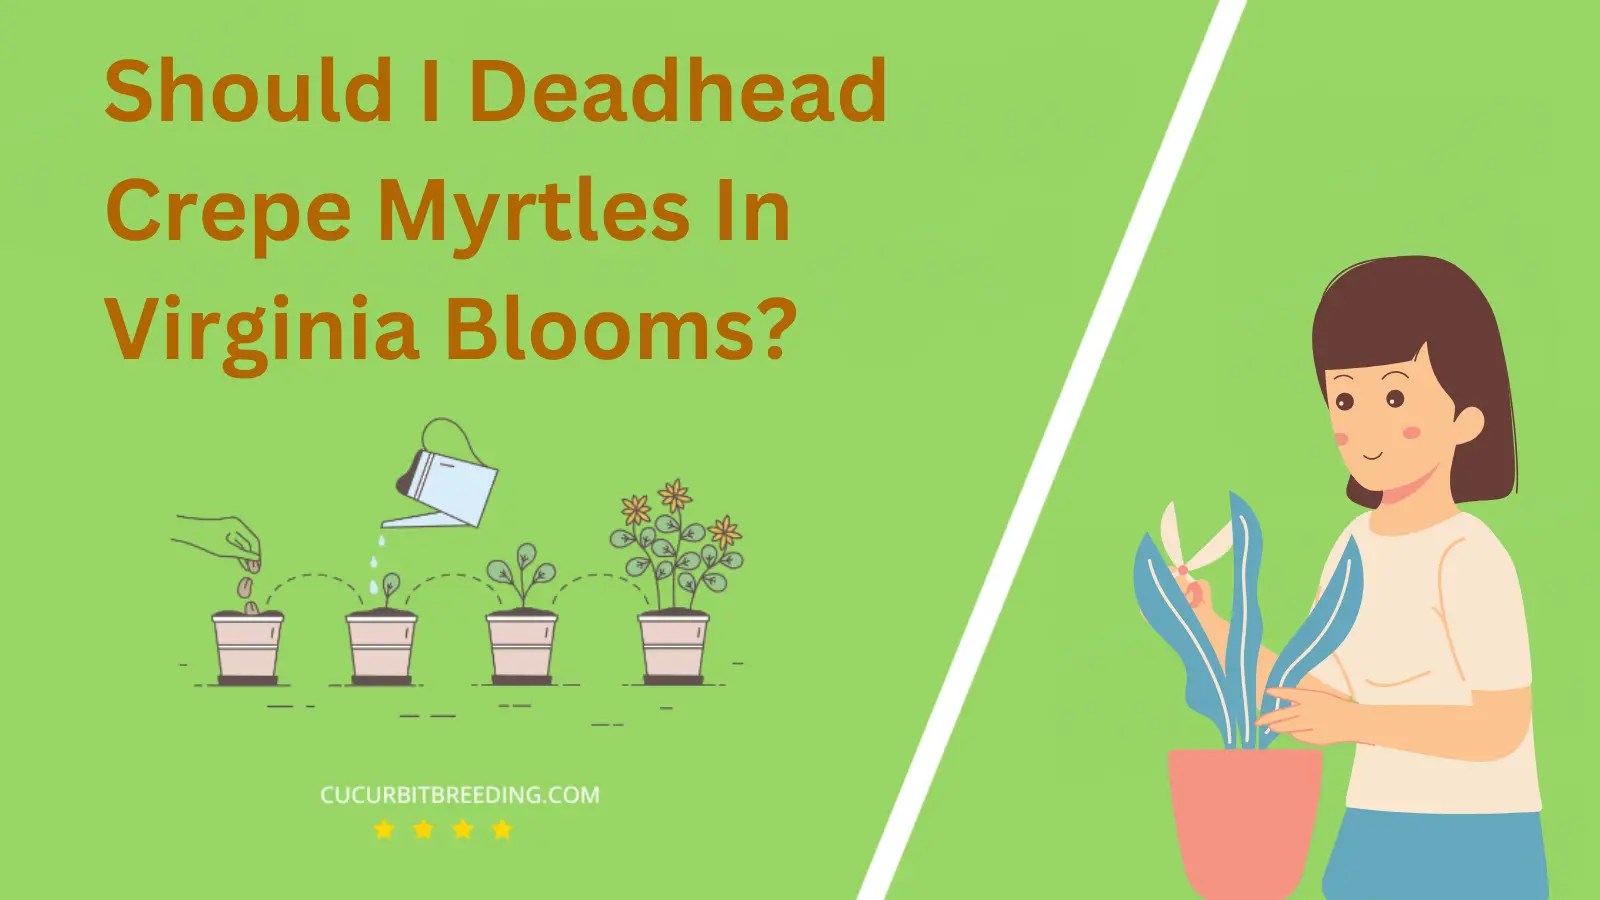 Should I Deadhead Crepe Myrtles In Virginia Blooms?